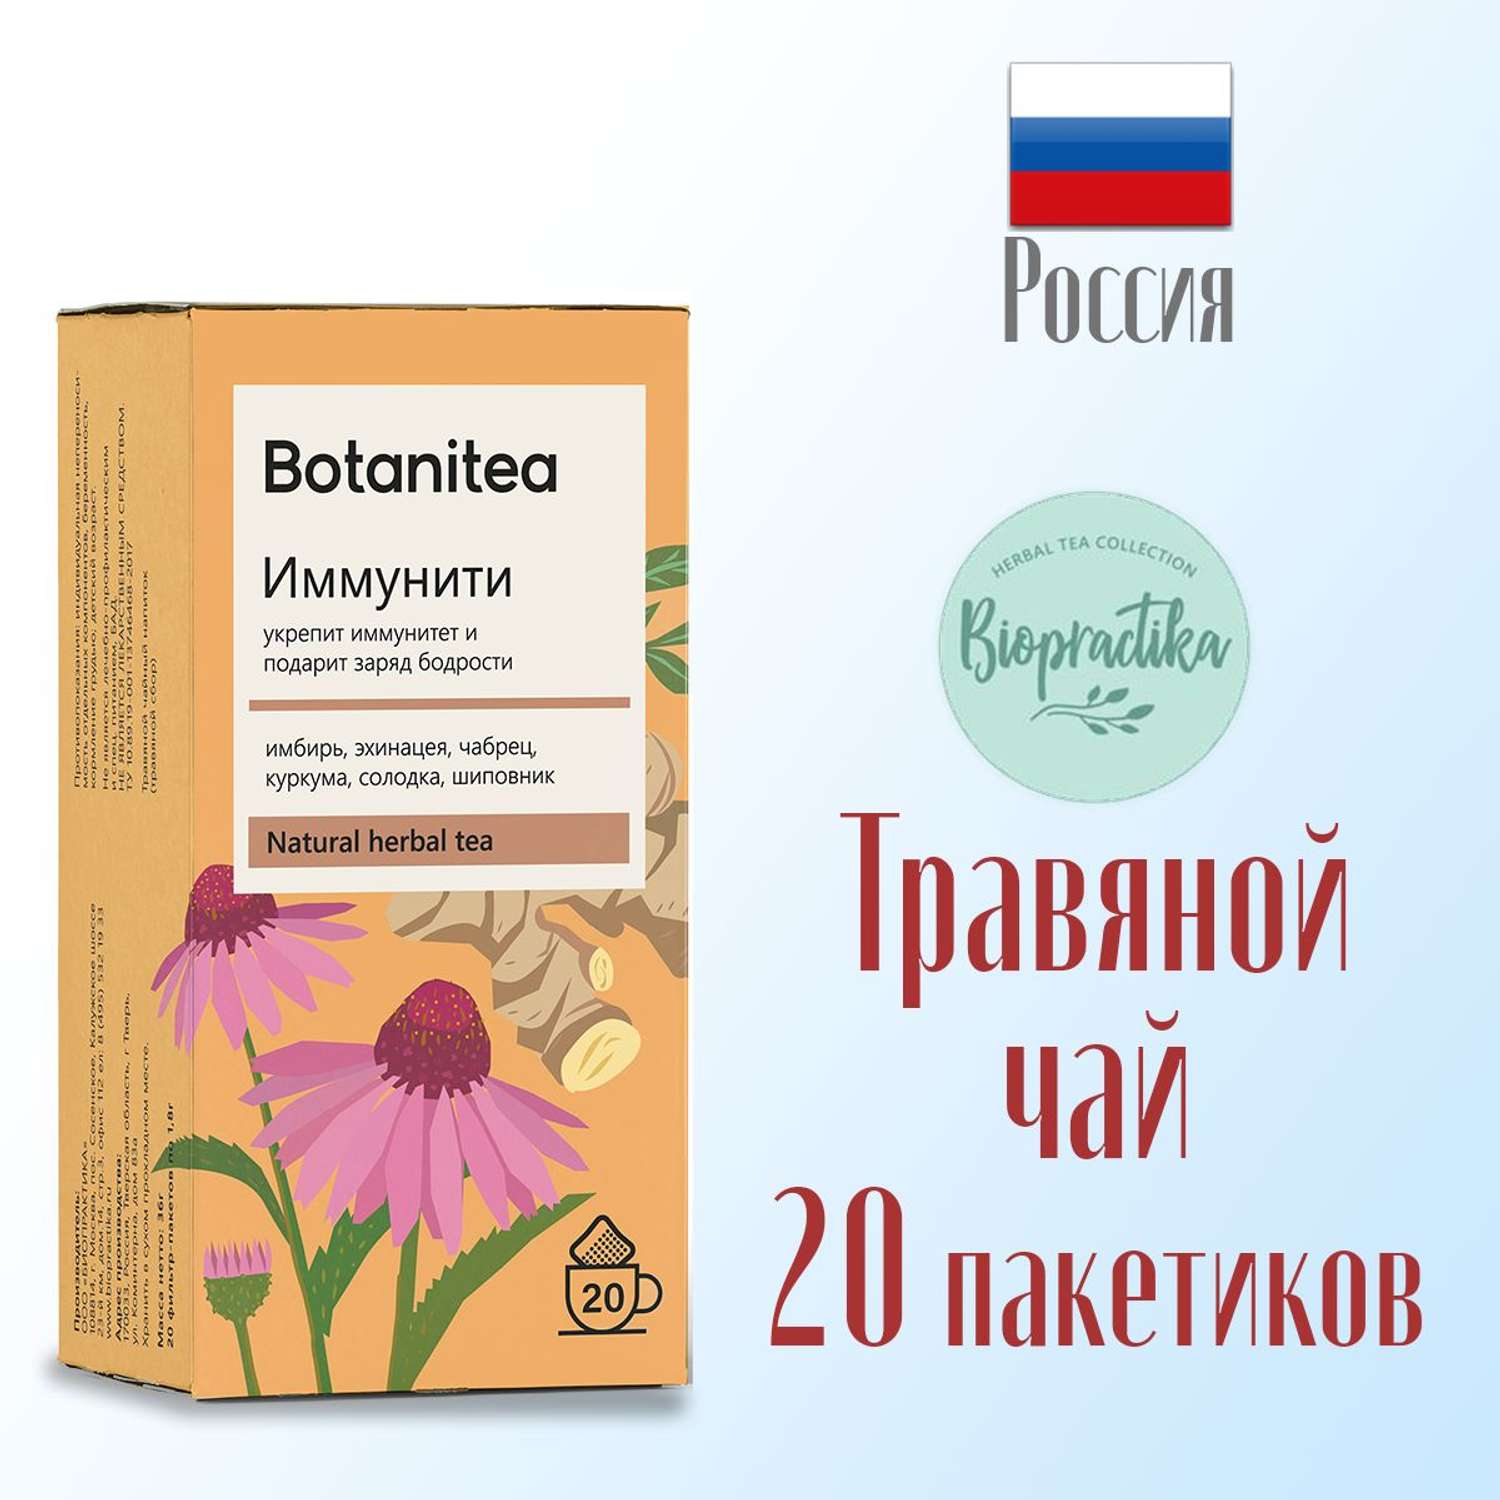 Botanitea. Biopractika чай. Инструкция травяного чая в пакетиках "botanitea" Иммунити. Травяной чай Биопрактика Biopractika botanitea сон. Чай травяной botanitea Antistress 20*1.8г цены.